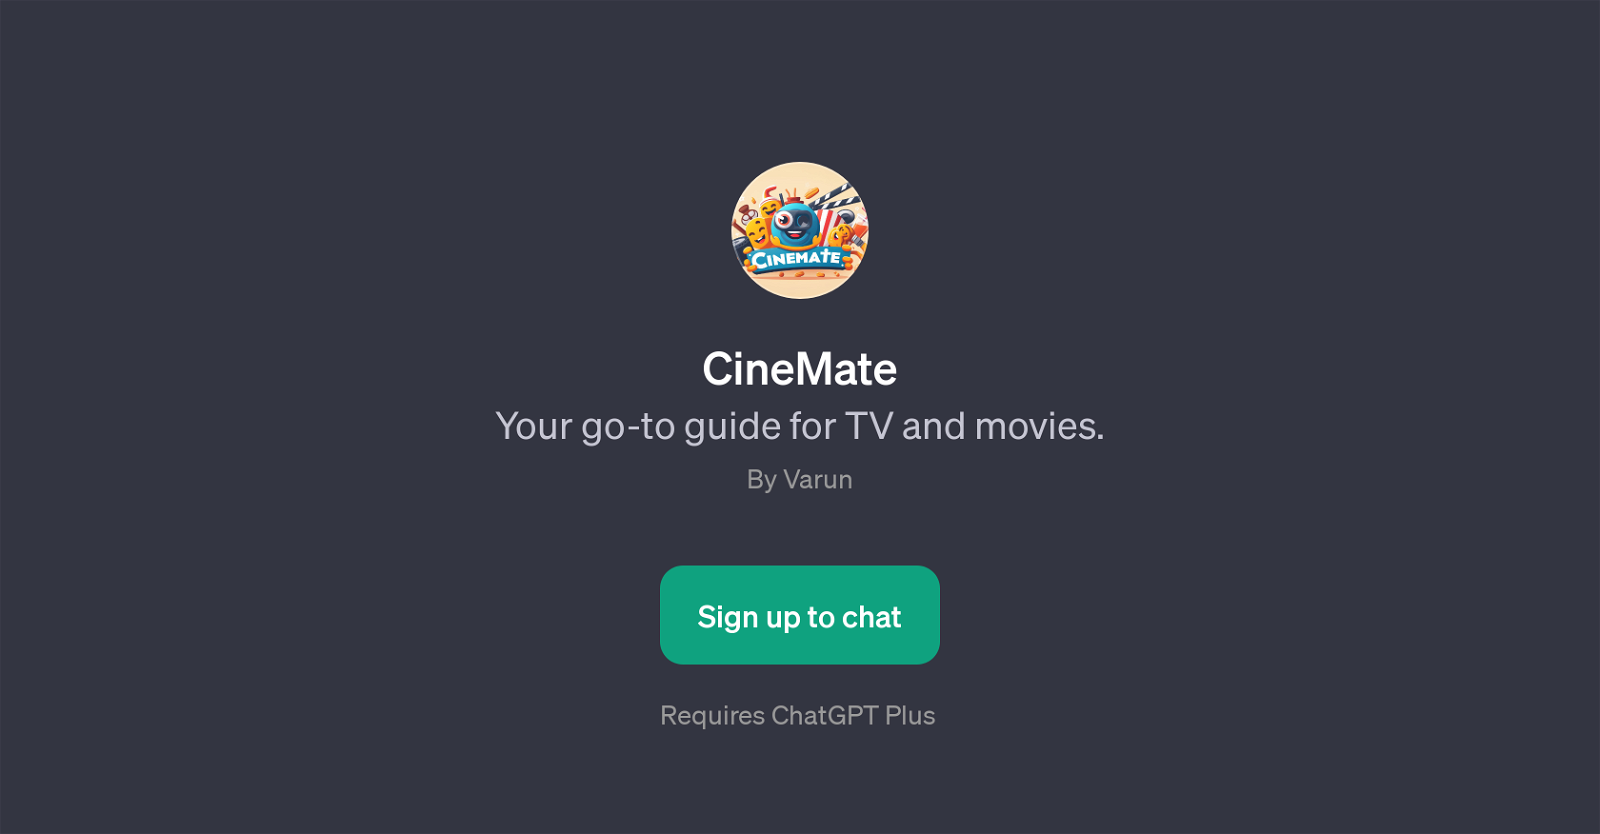 CineMate website